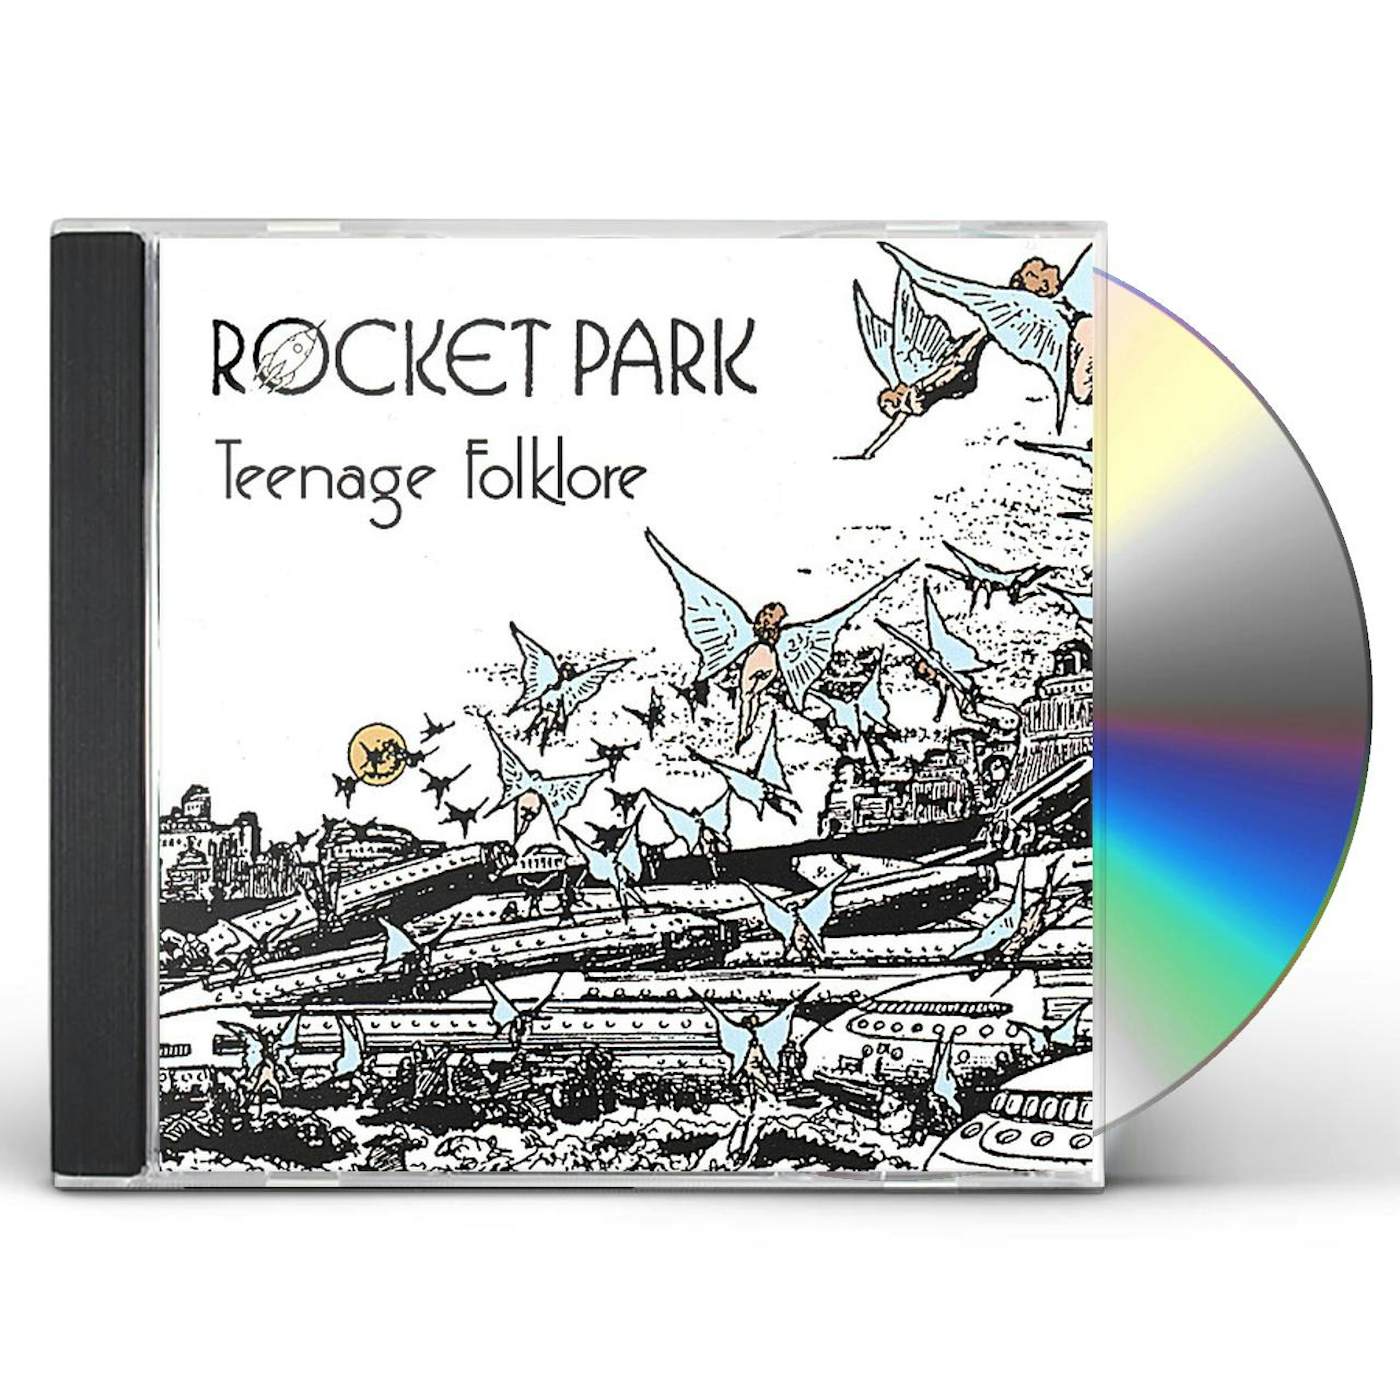 Rocket Park TEENAGE FOLKLORE CD